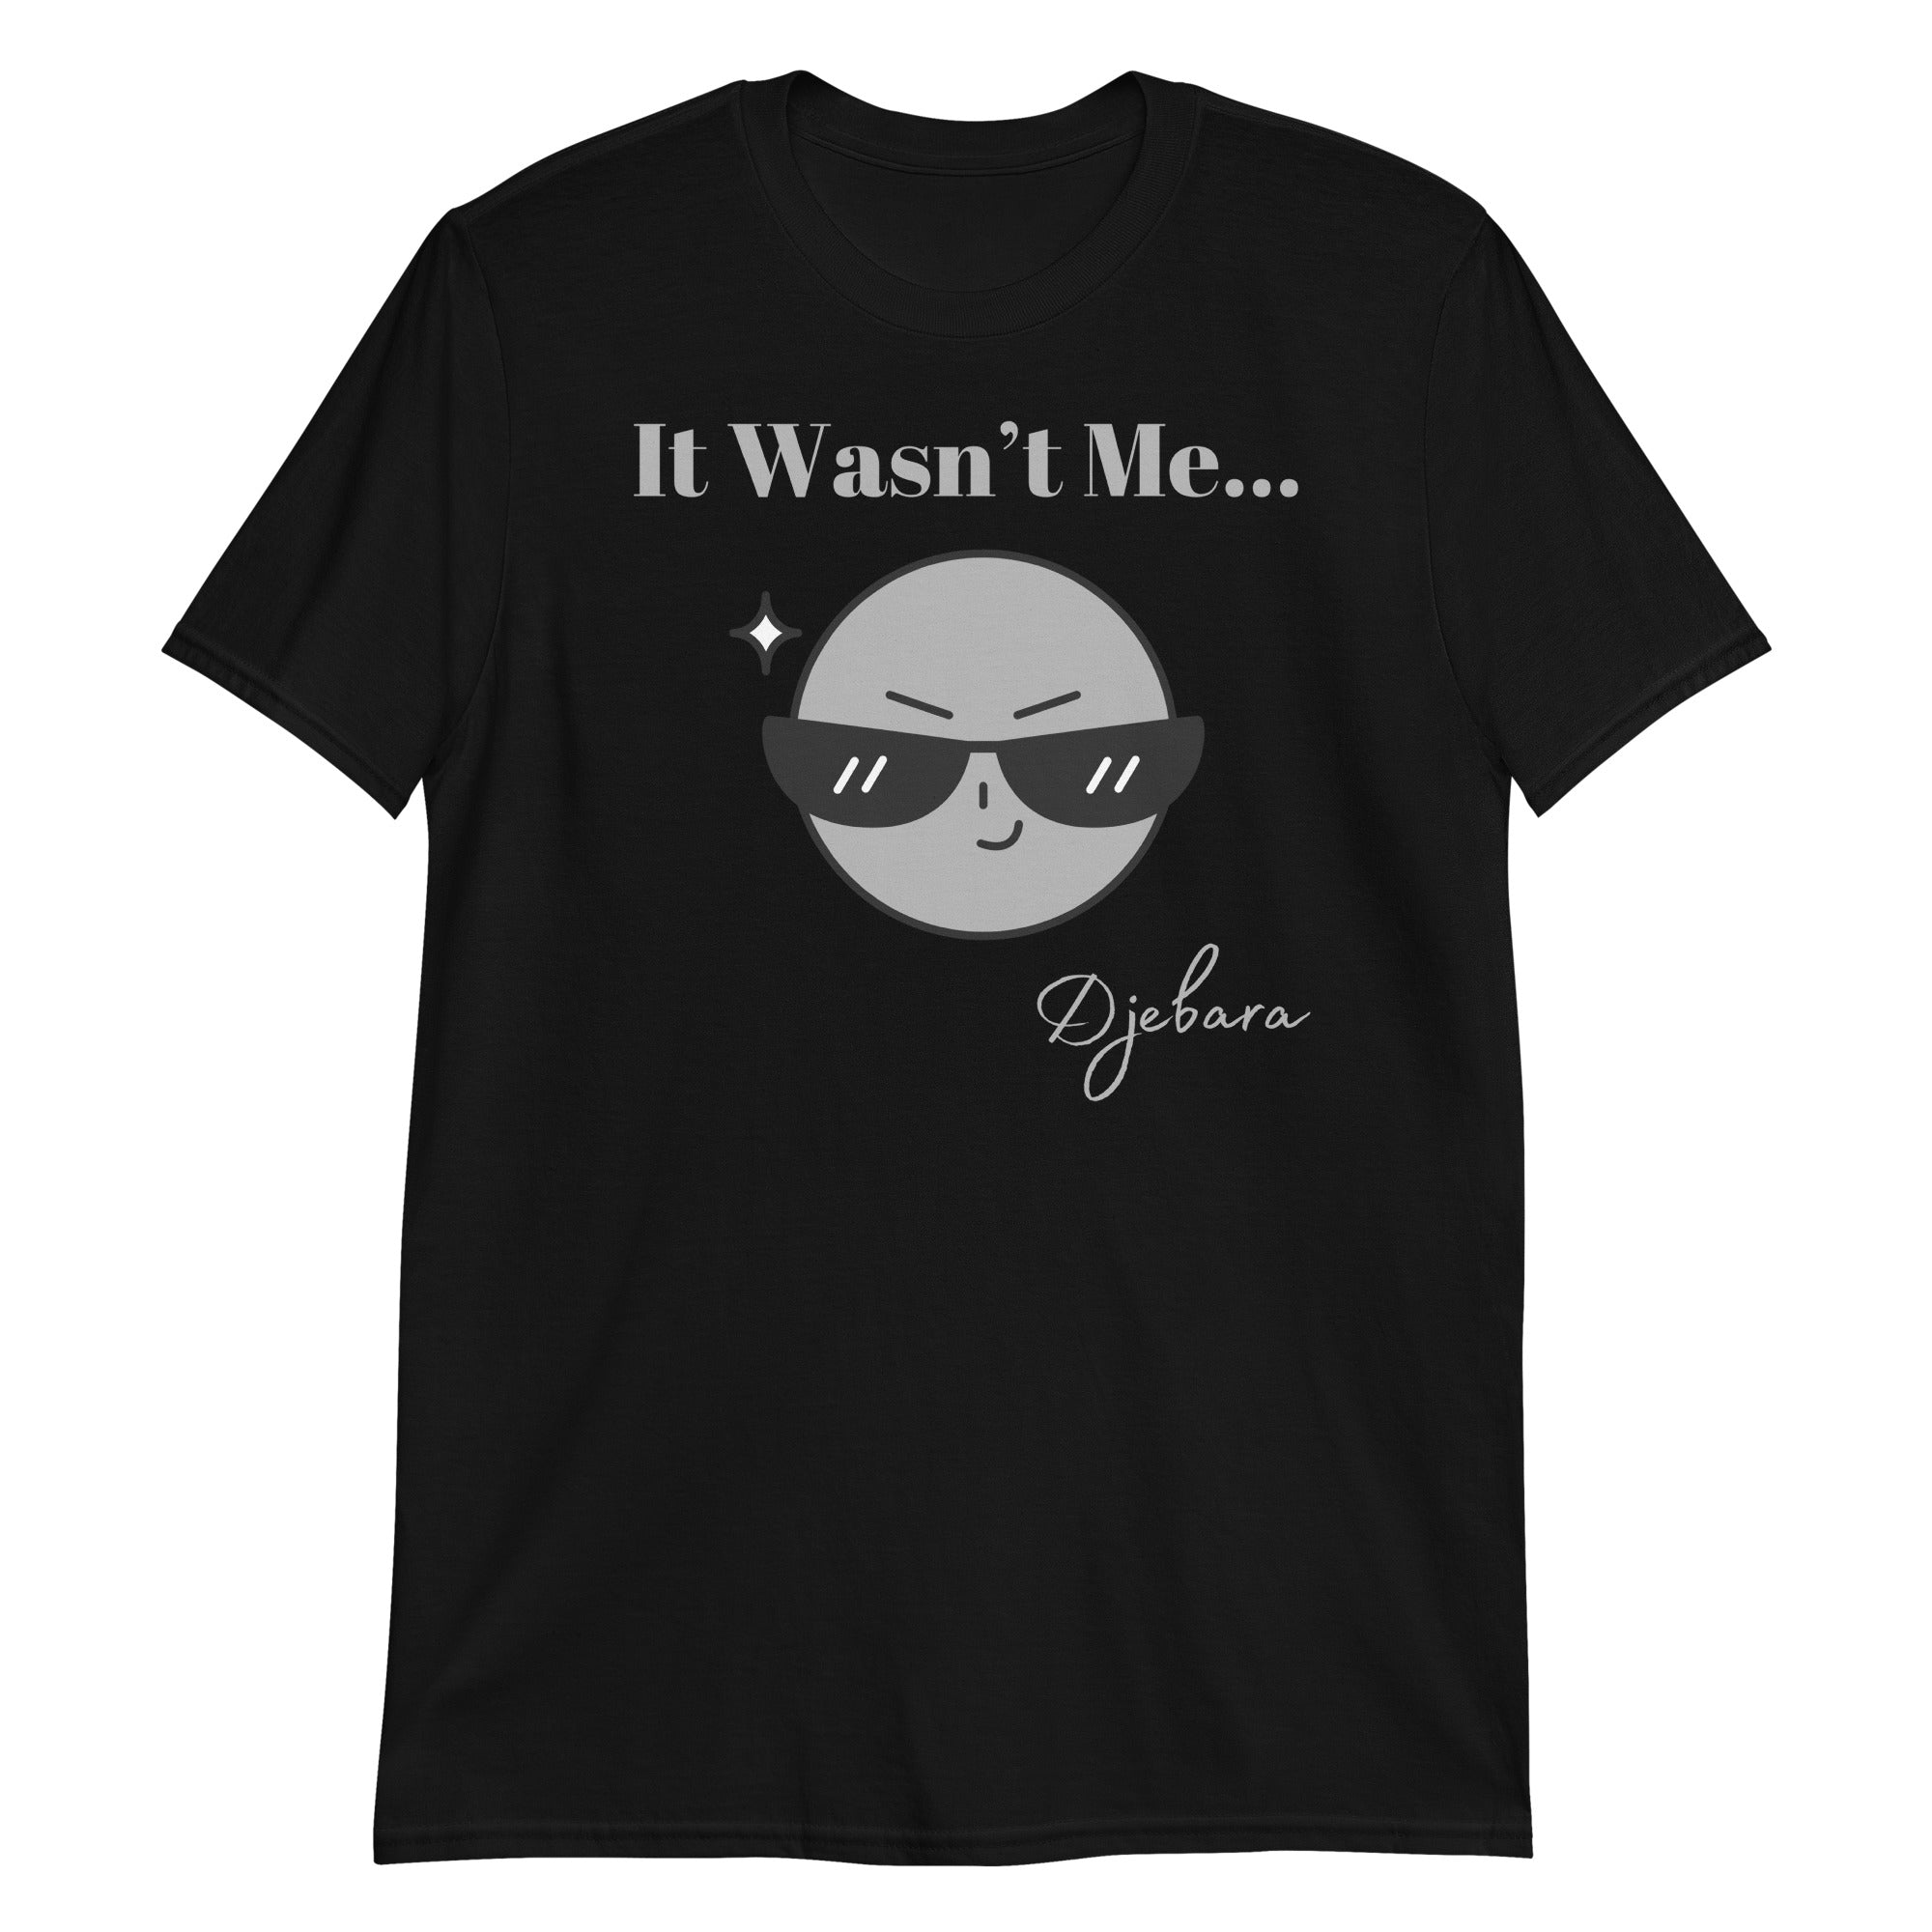 Black It Wasn't Me... Short-Sleeve Gildan Unisex T-Shirt (Grey) S-3XL